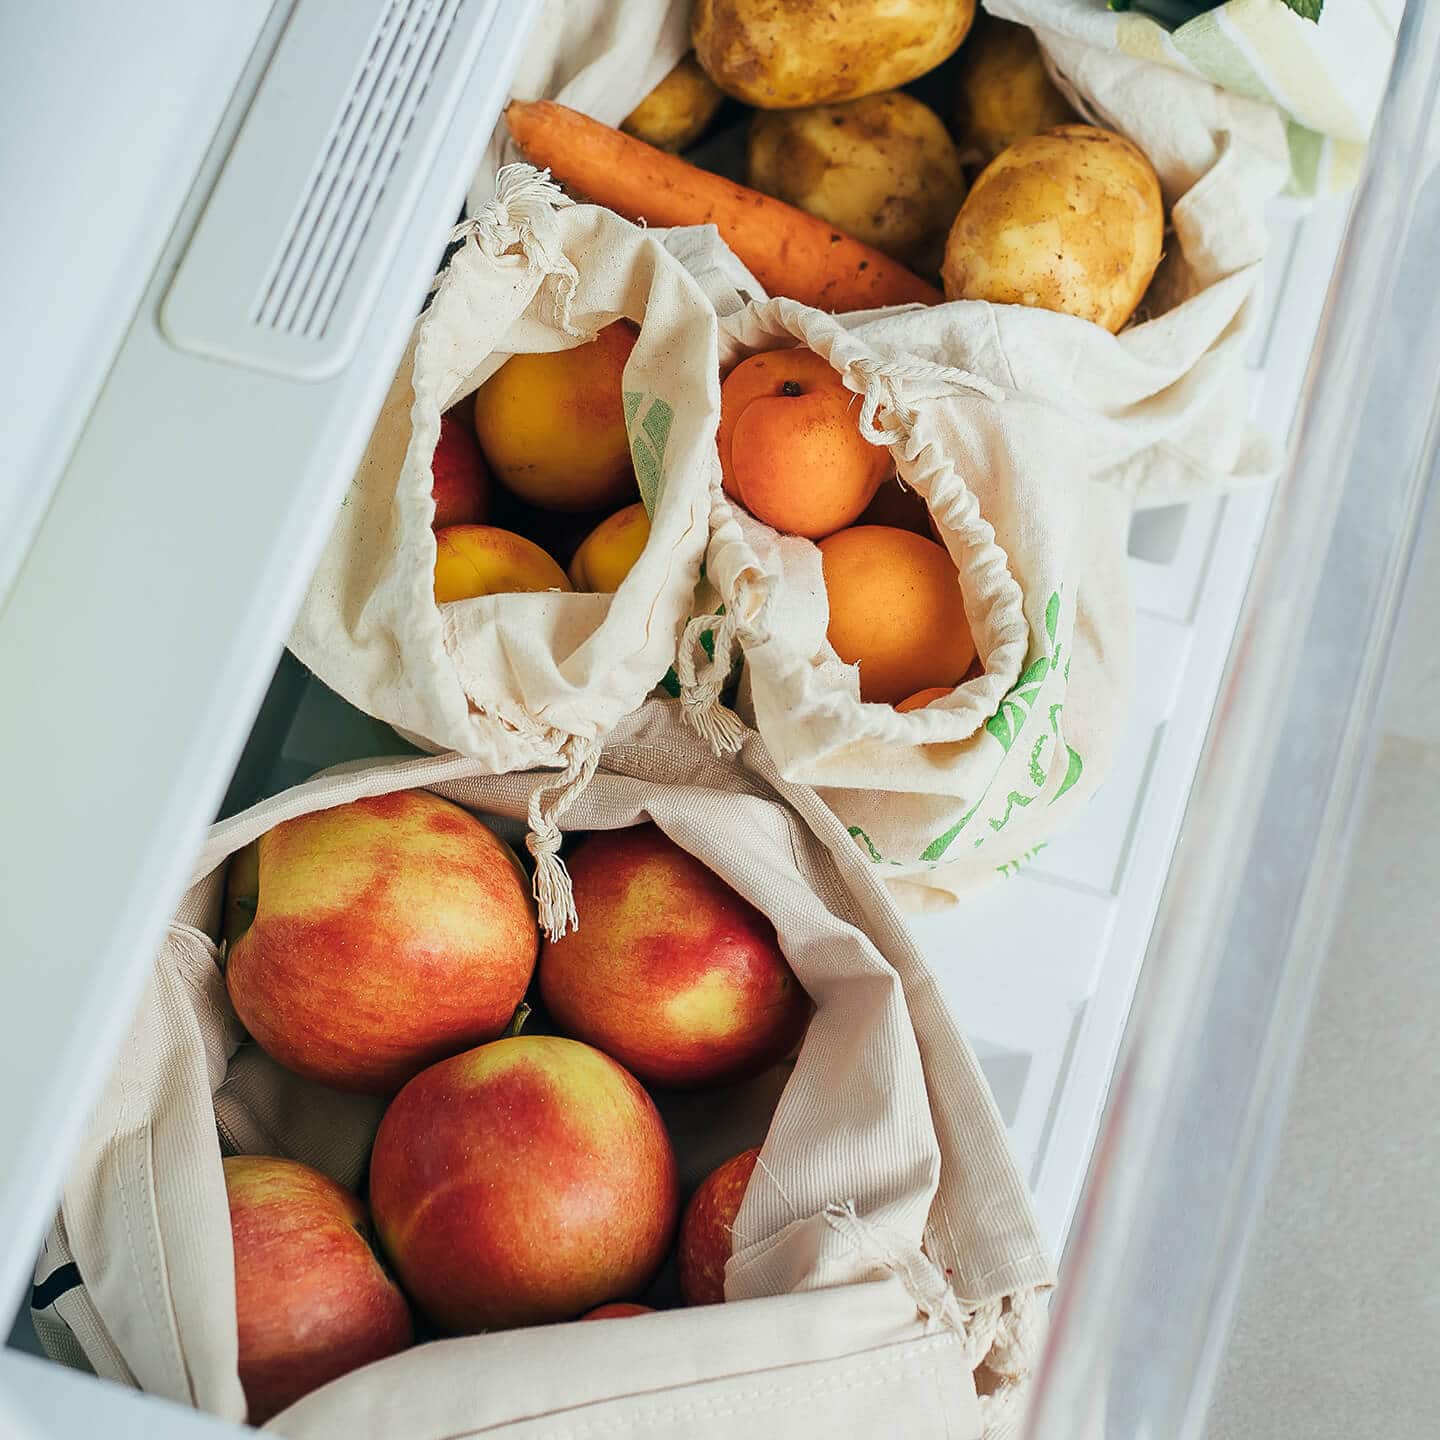 how-to-store-food-slider-2-fruits-vegetables-card-2.jpg